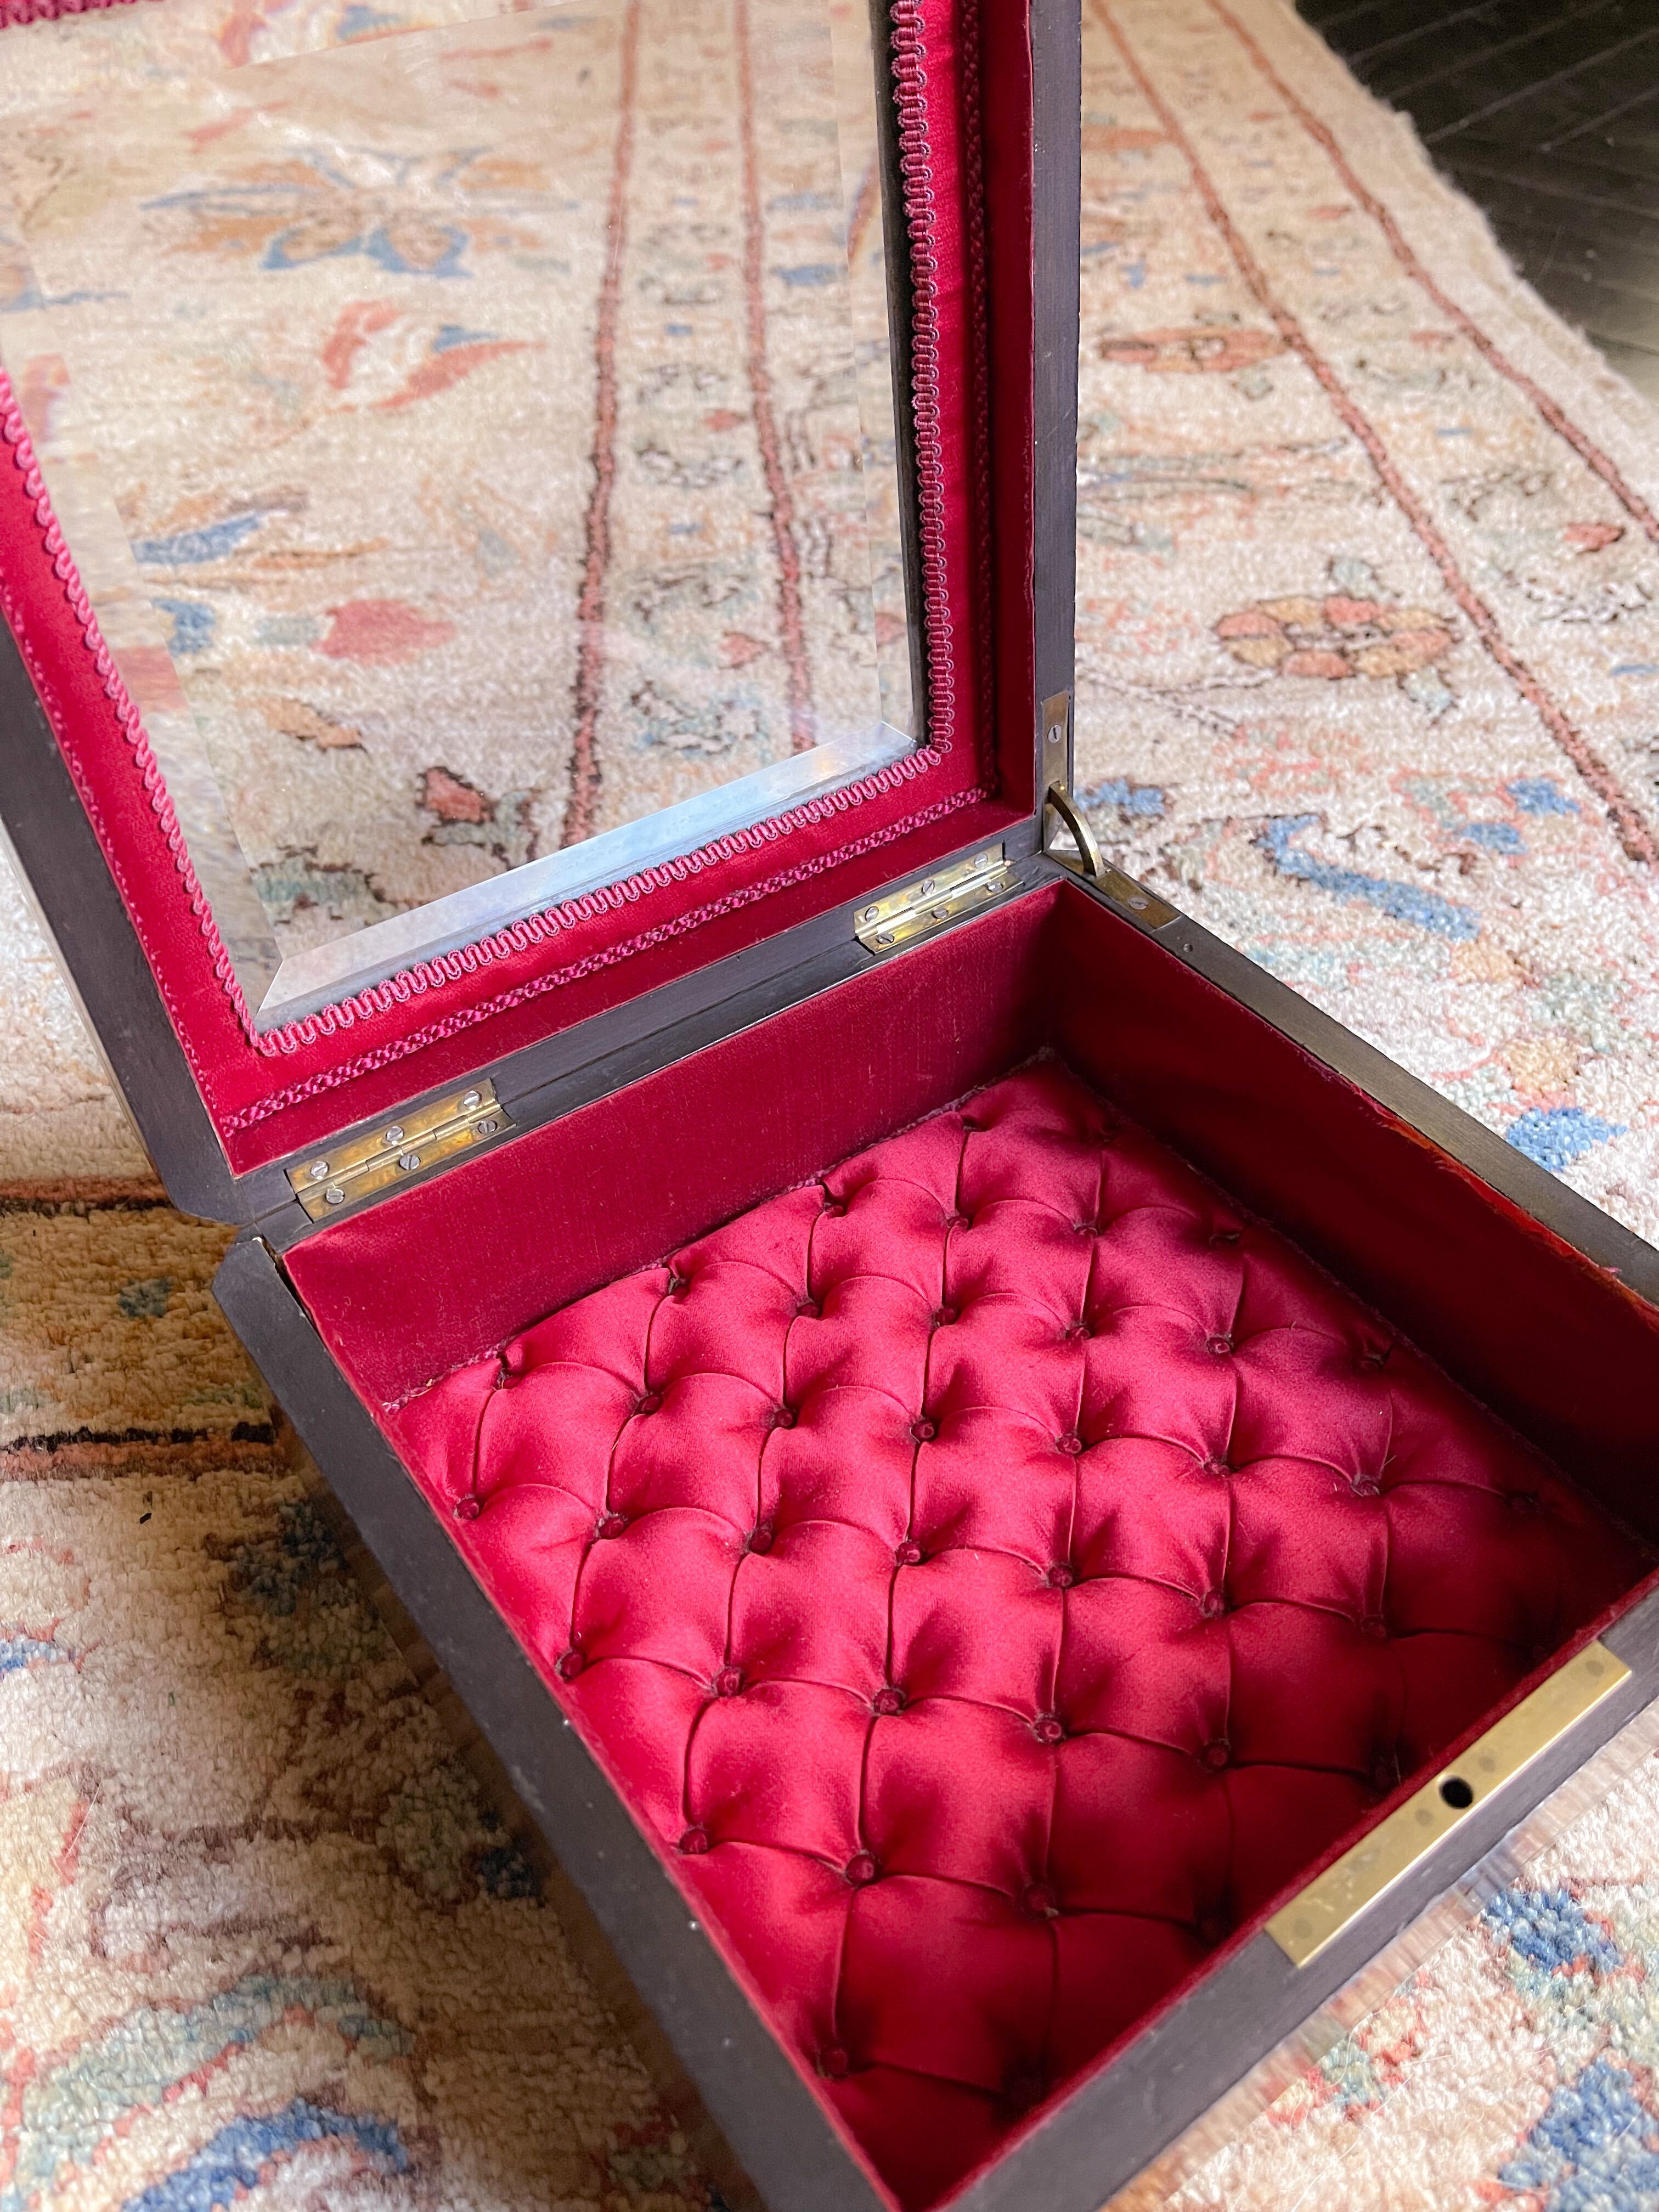 Exceptional French napoleon III Period Jewelry Box